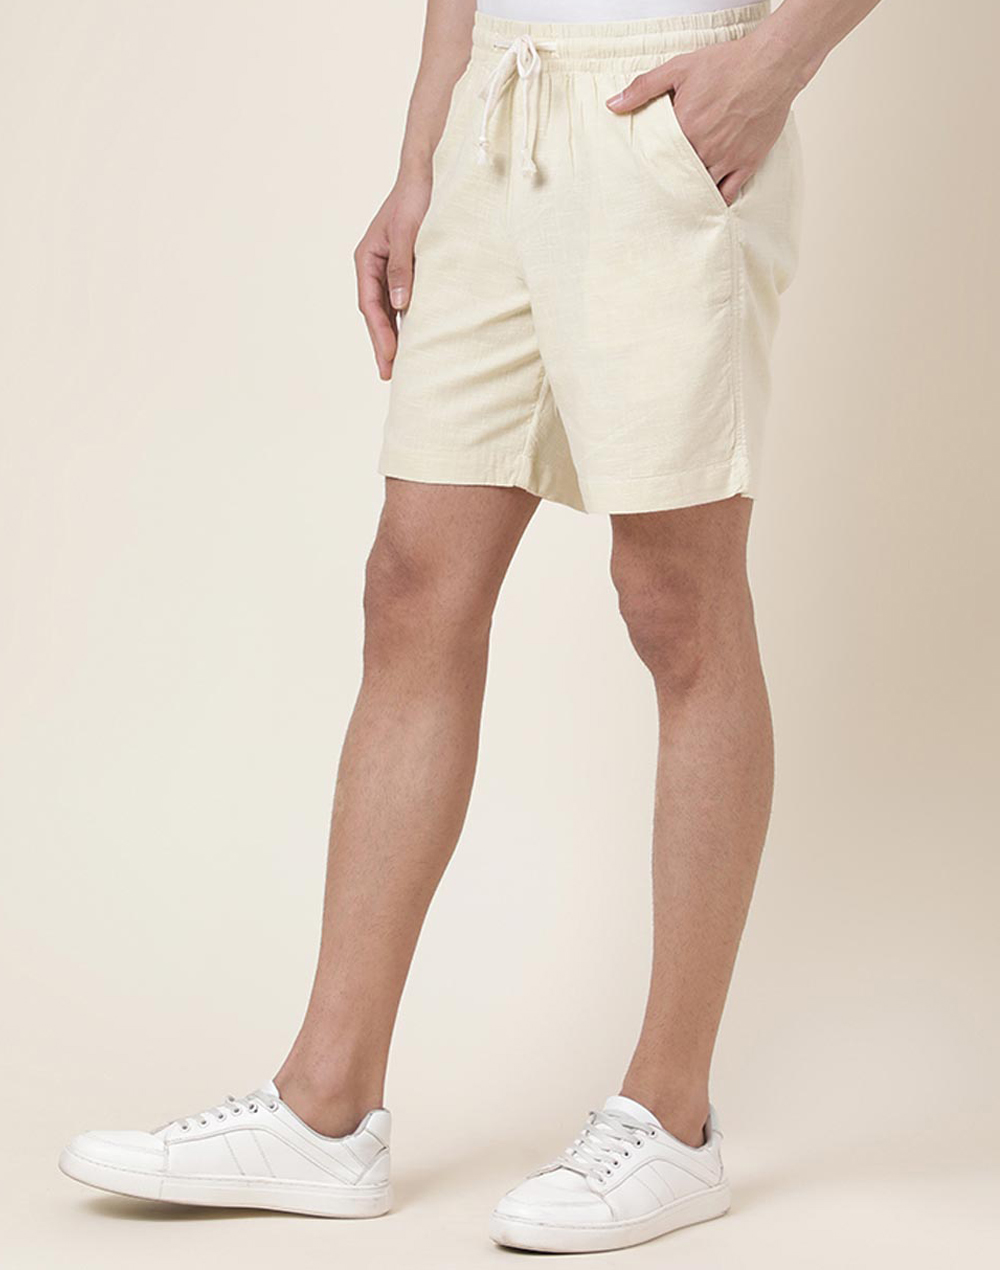 Buy Natural Cotton Knee Length Drawstring Shorts for Men Online at Fabindia